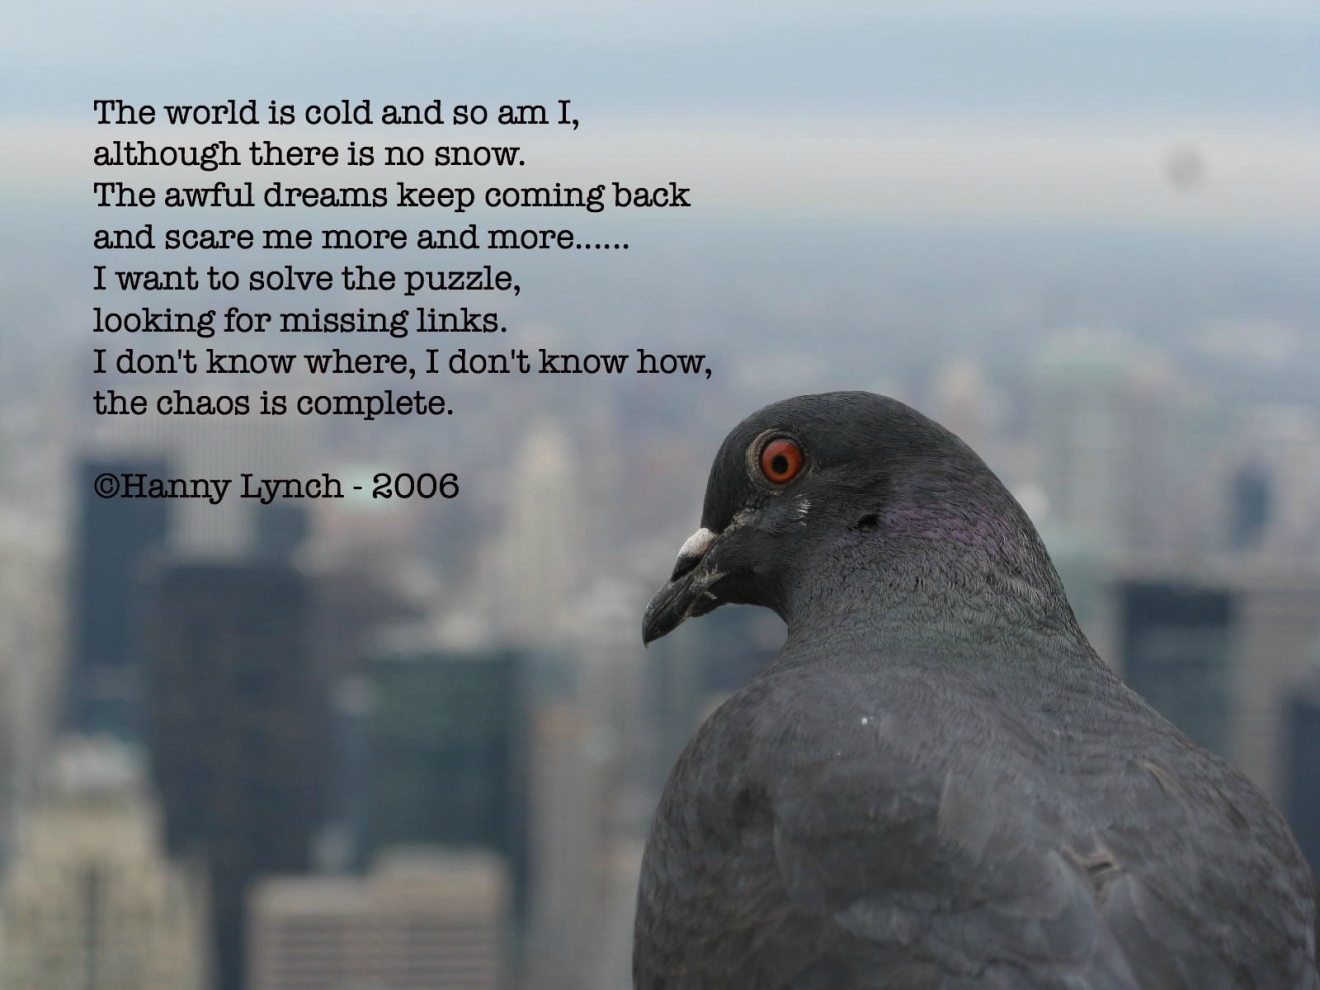 Hanny Lynch poem pigeon